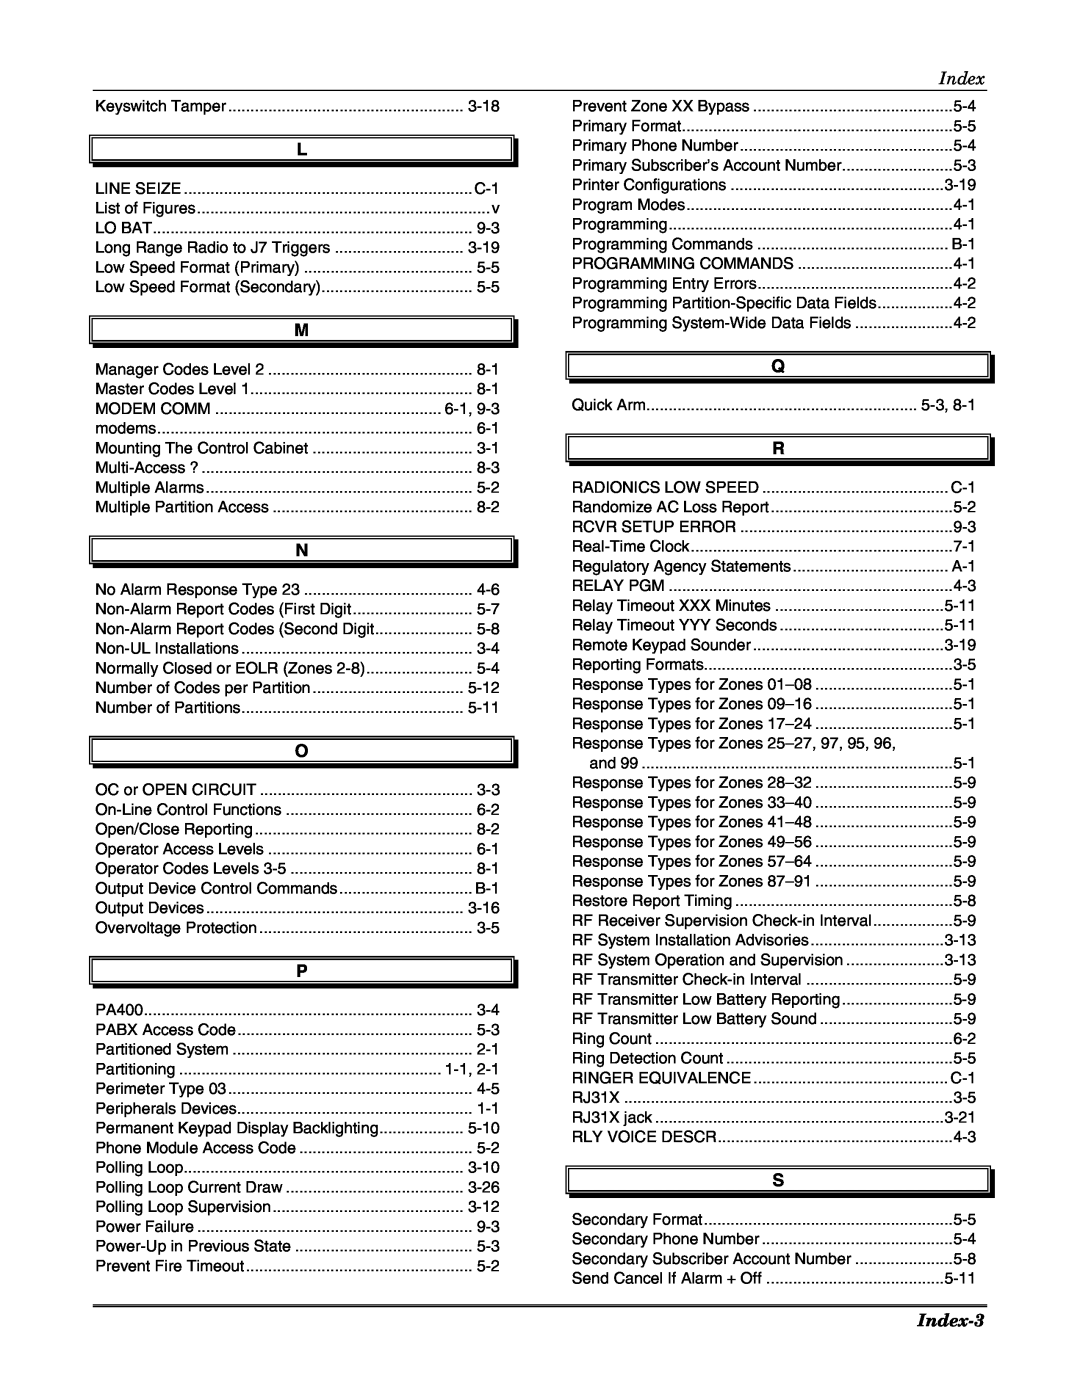 Honeywell 3.5, ZyAIR G-3000 manual Index-3 